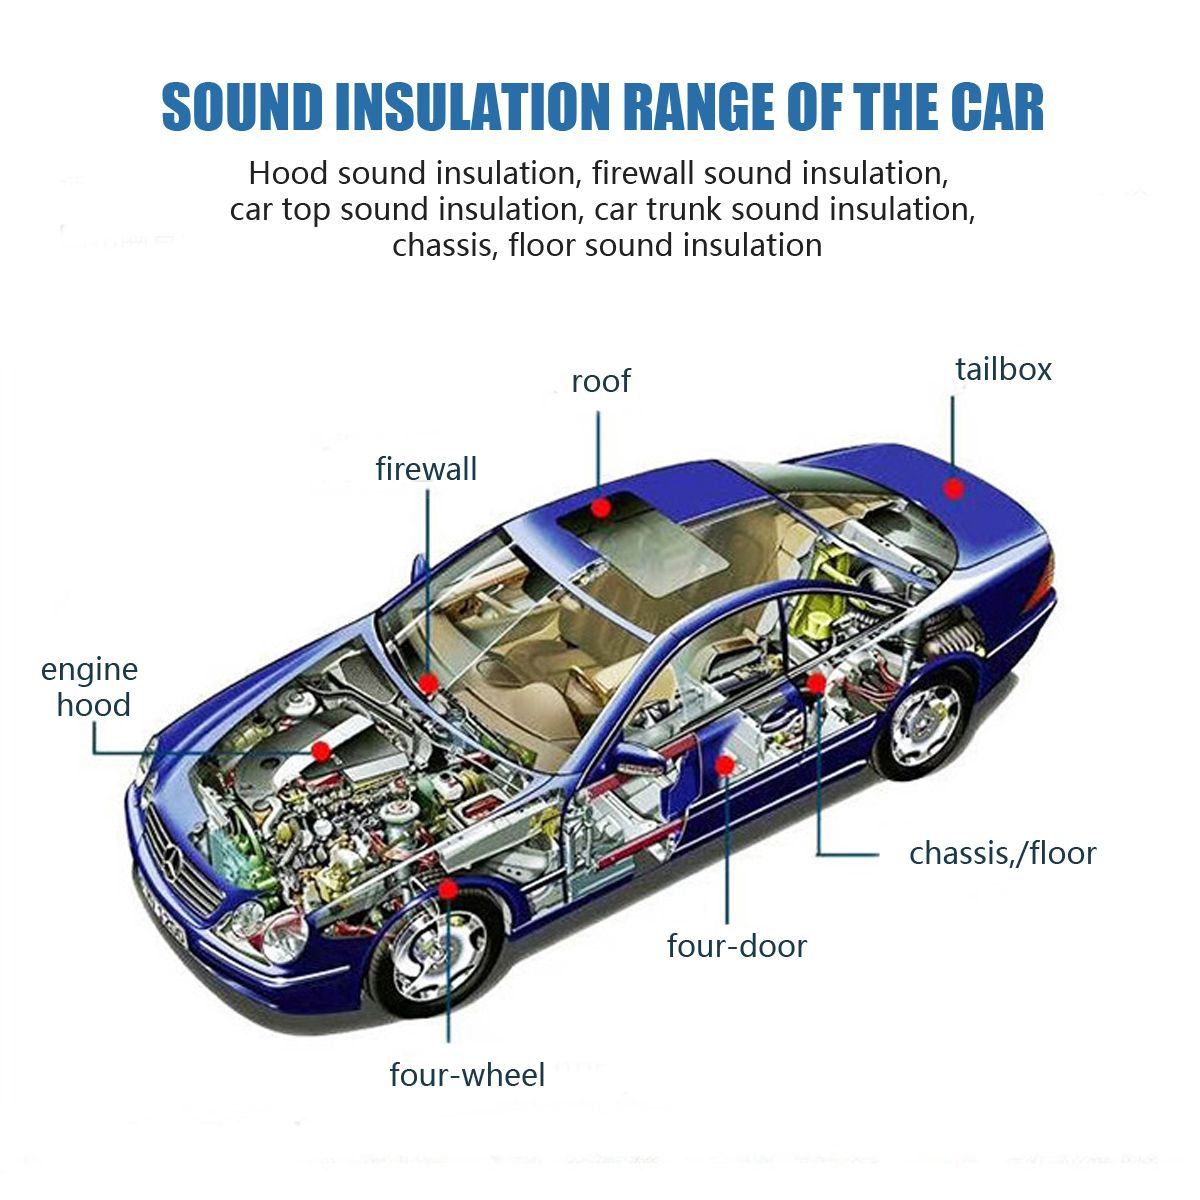 5mm-Thickness-Heat-Sound-Deadener-Insulation-Mat-Sound-Proofing-Deadening-Pad-1x234m-for-Car-Truck-1622207